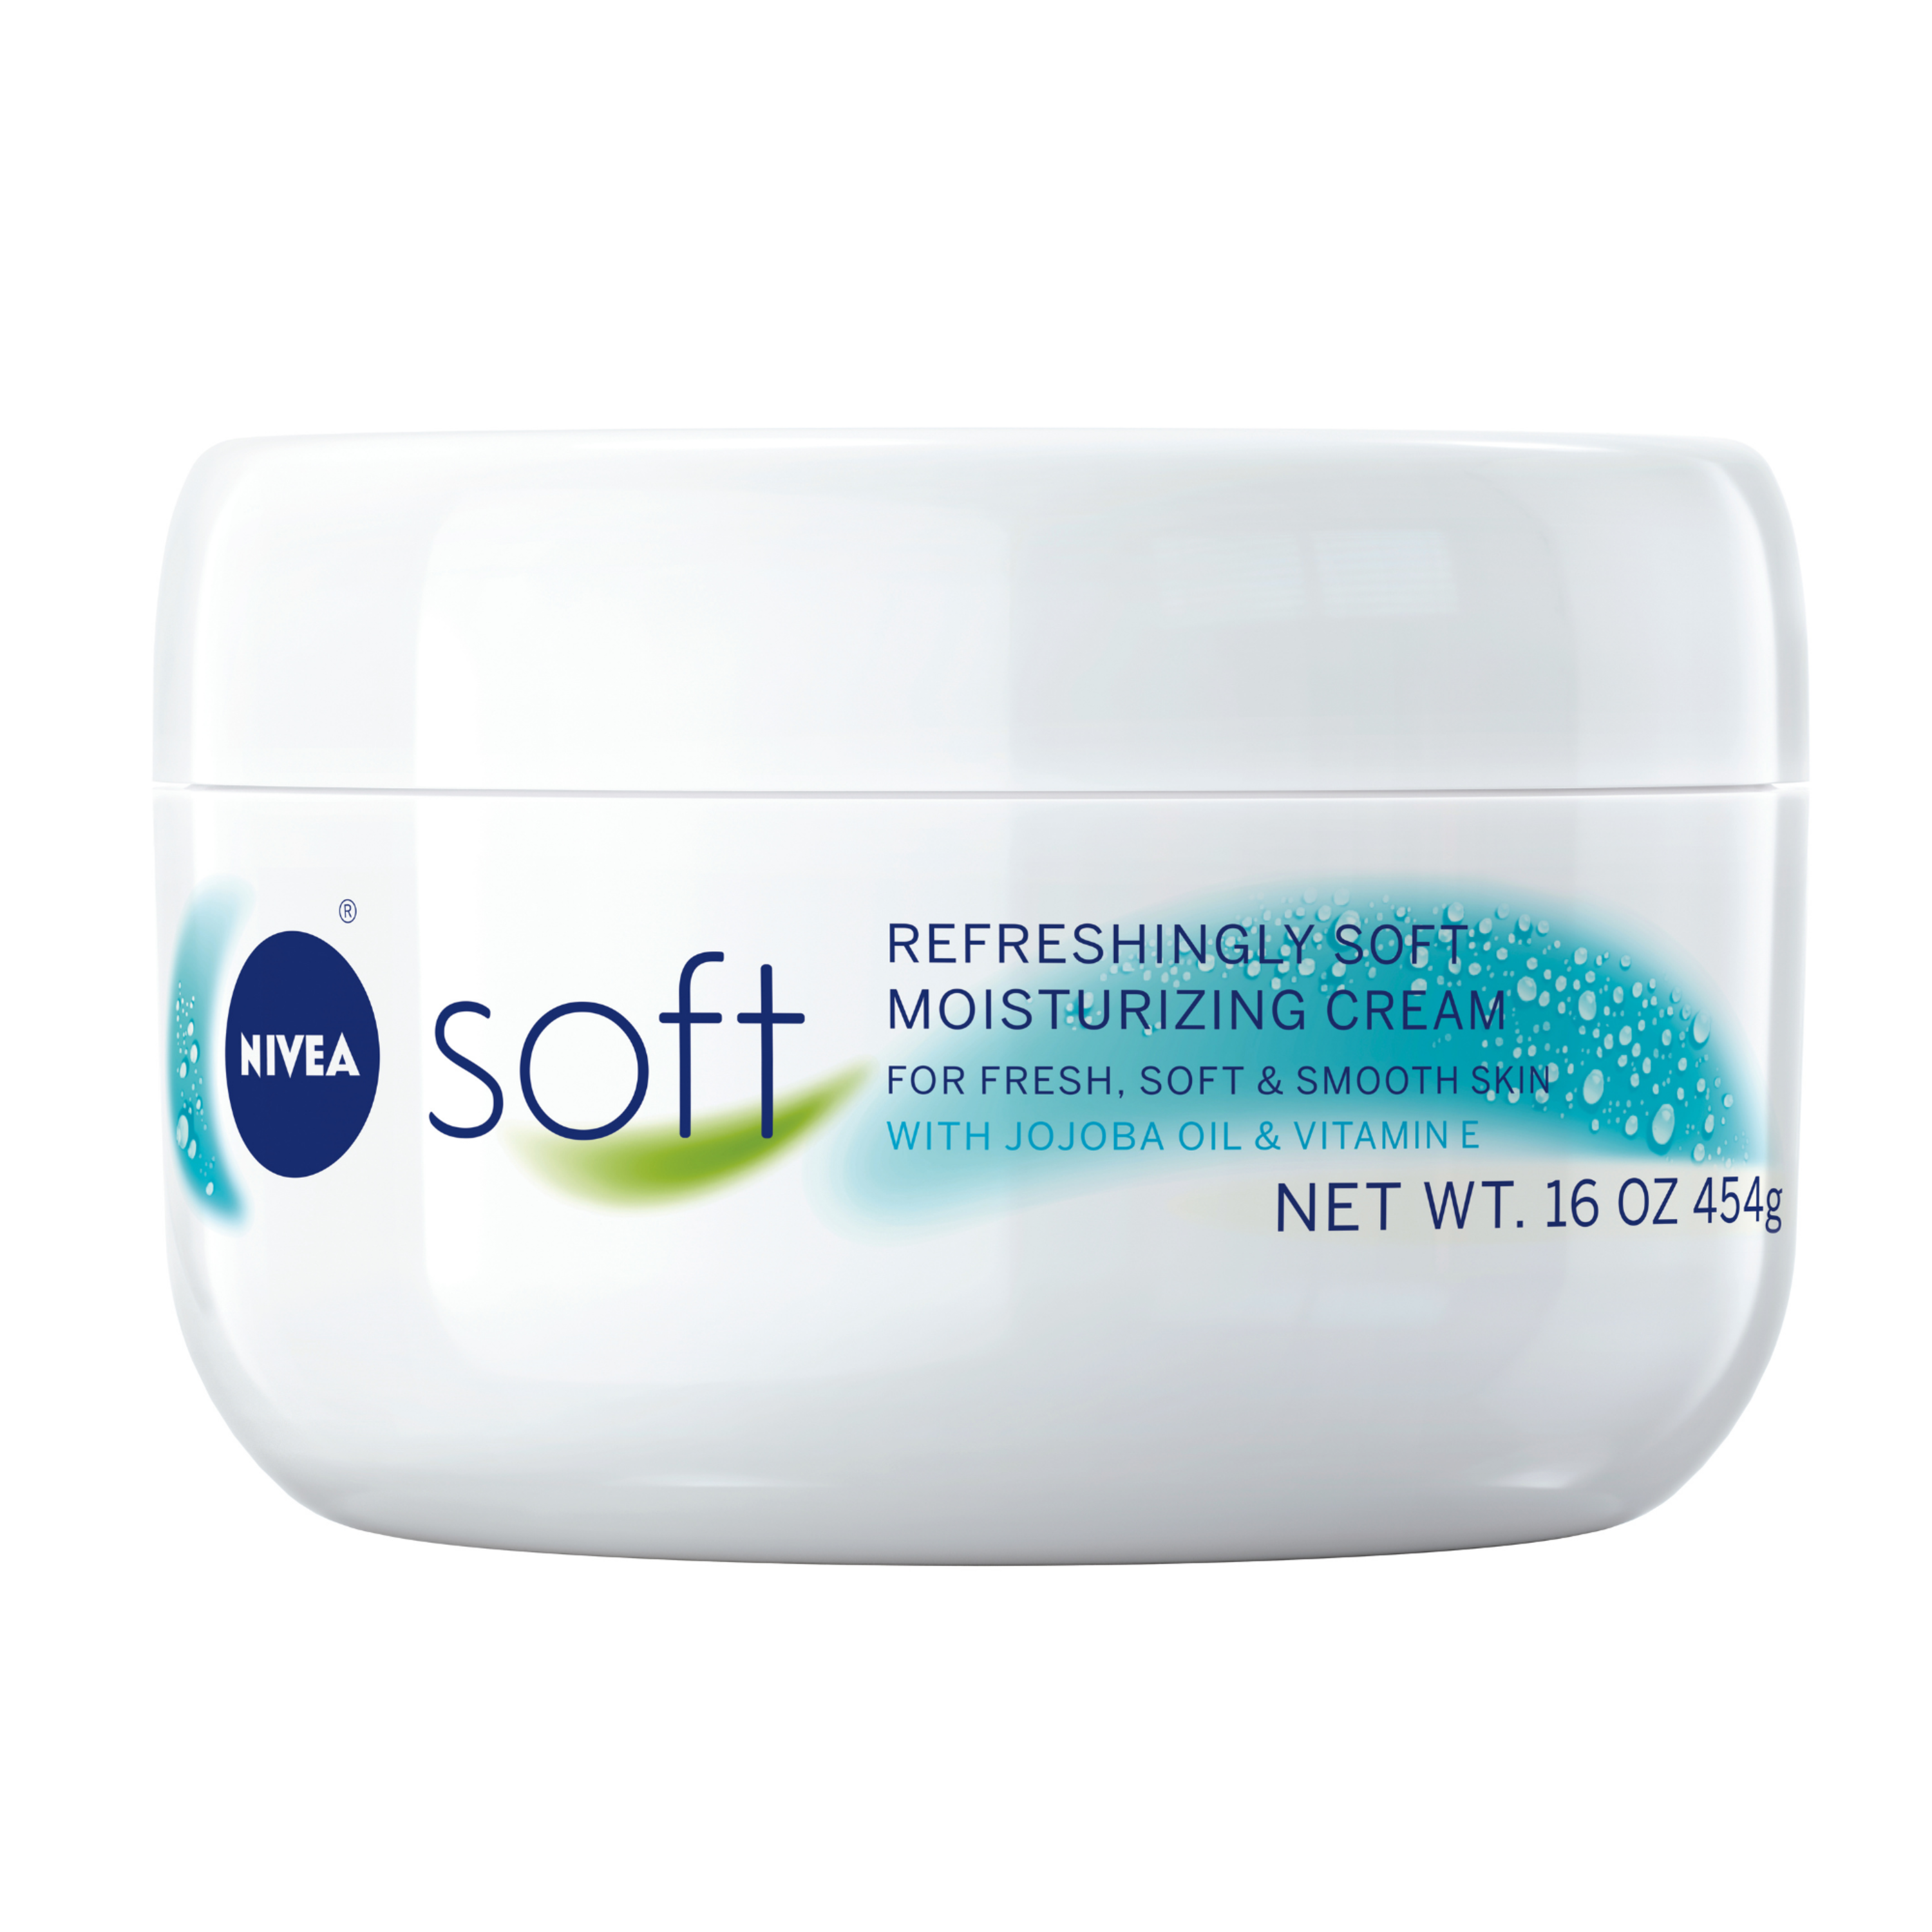 NIVEA Soft Cream, Refreshingly Soft Moisturizing Cream, Body Cream, Hand Cream, Face Cream, 16 Oz Jar - image 1 of 9